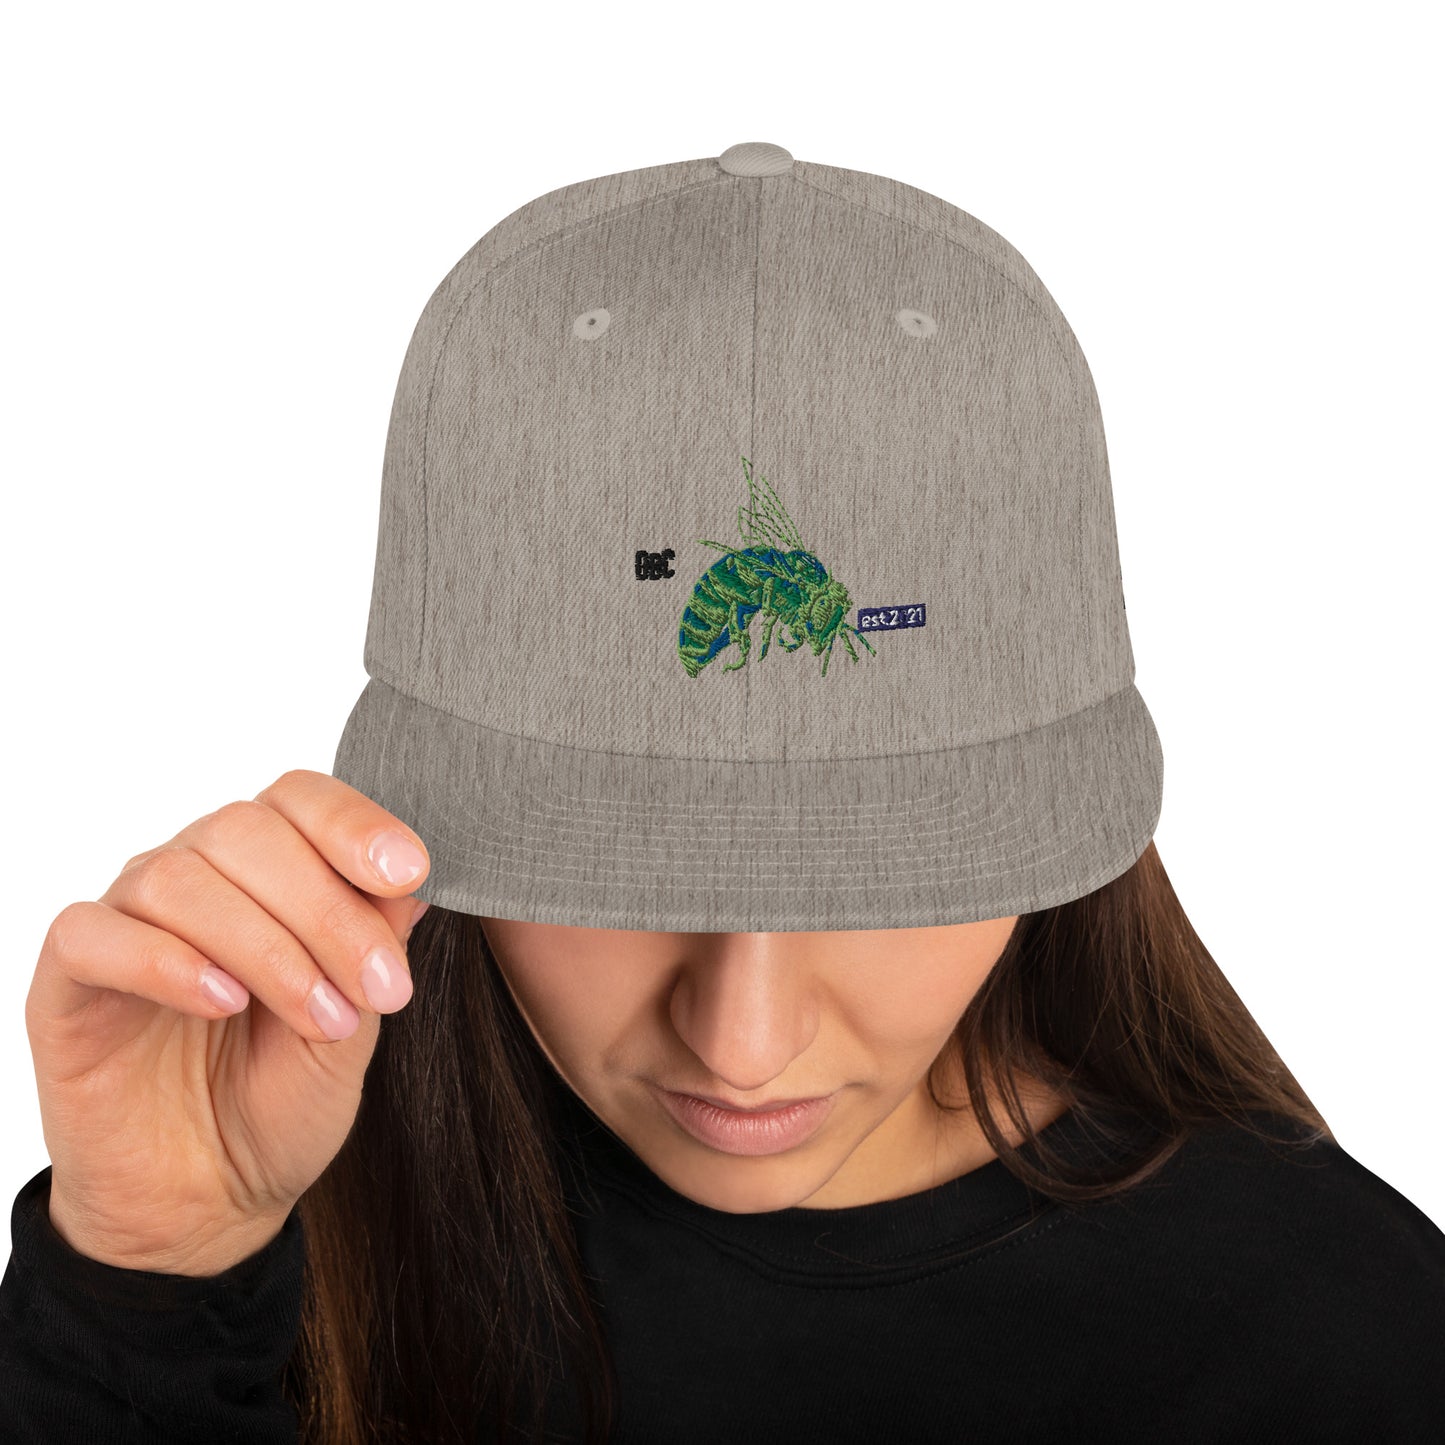 Damani Bee Snapback Hat